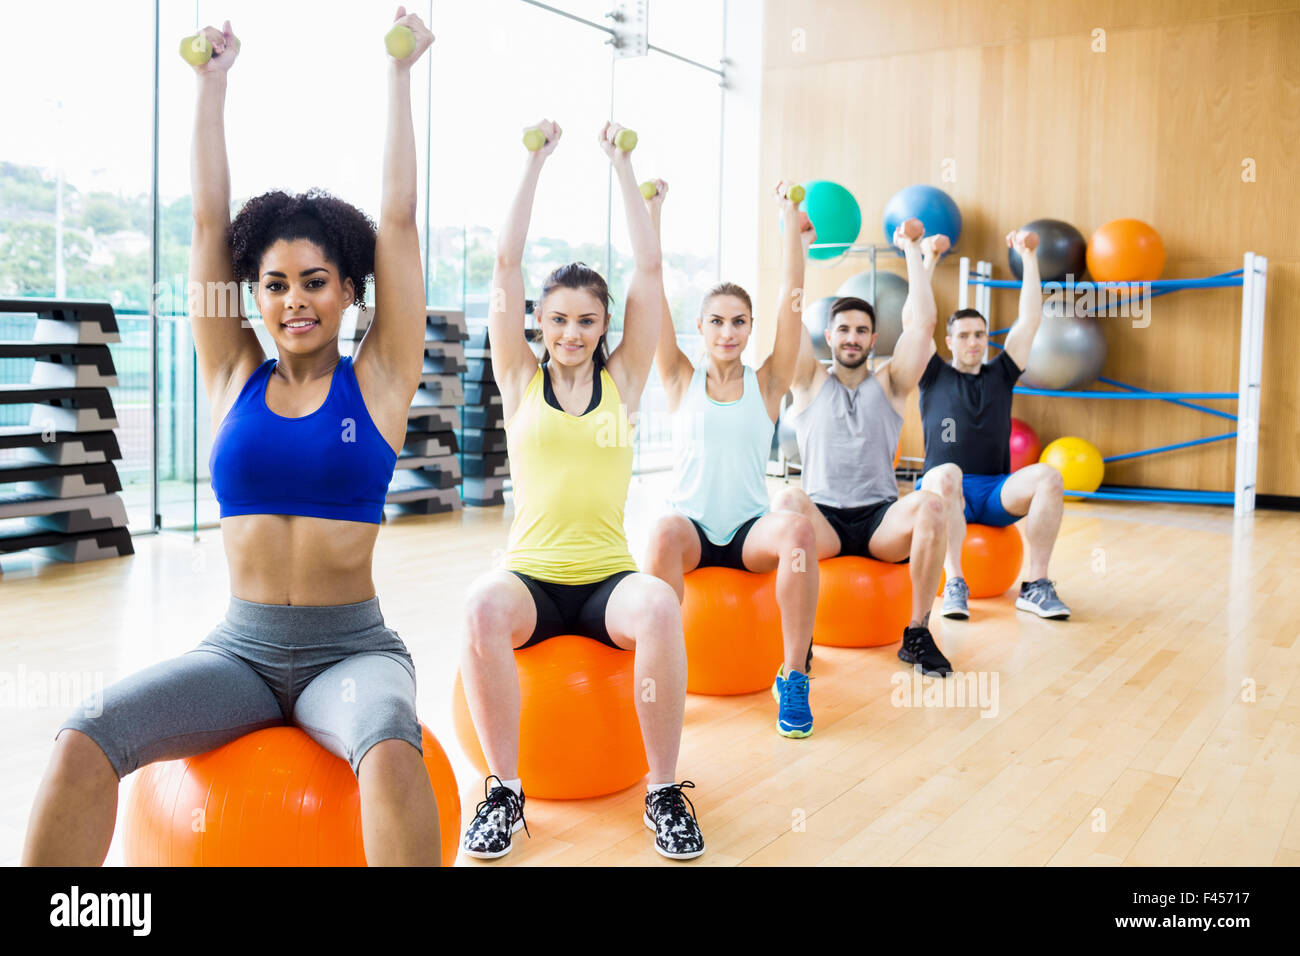 Fitness class exercising in the studio Stock Photo